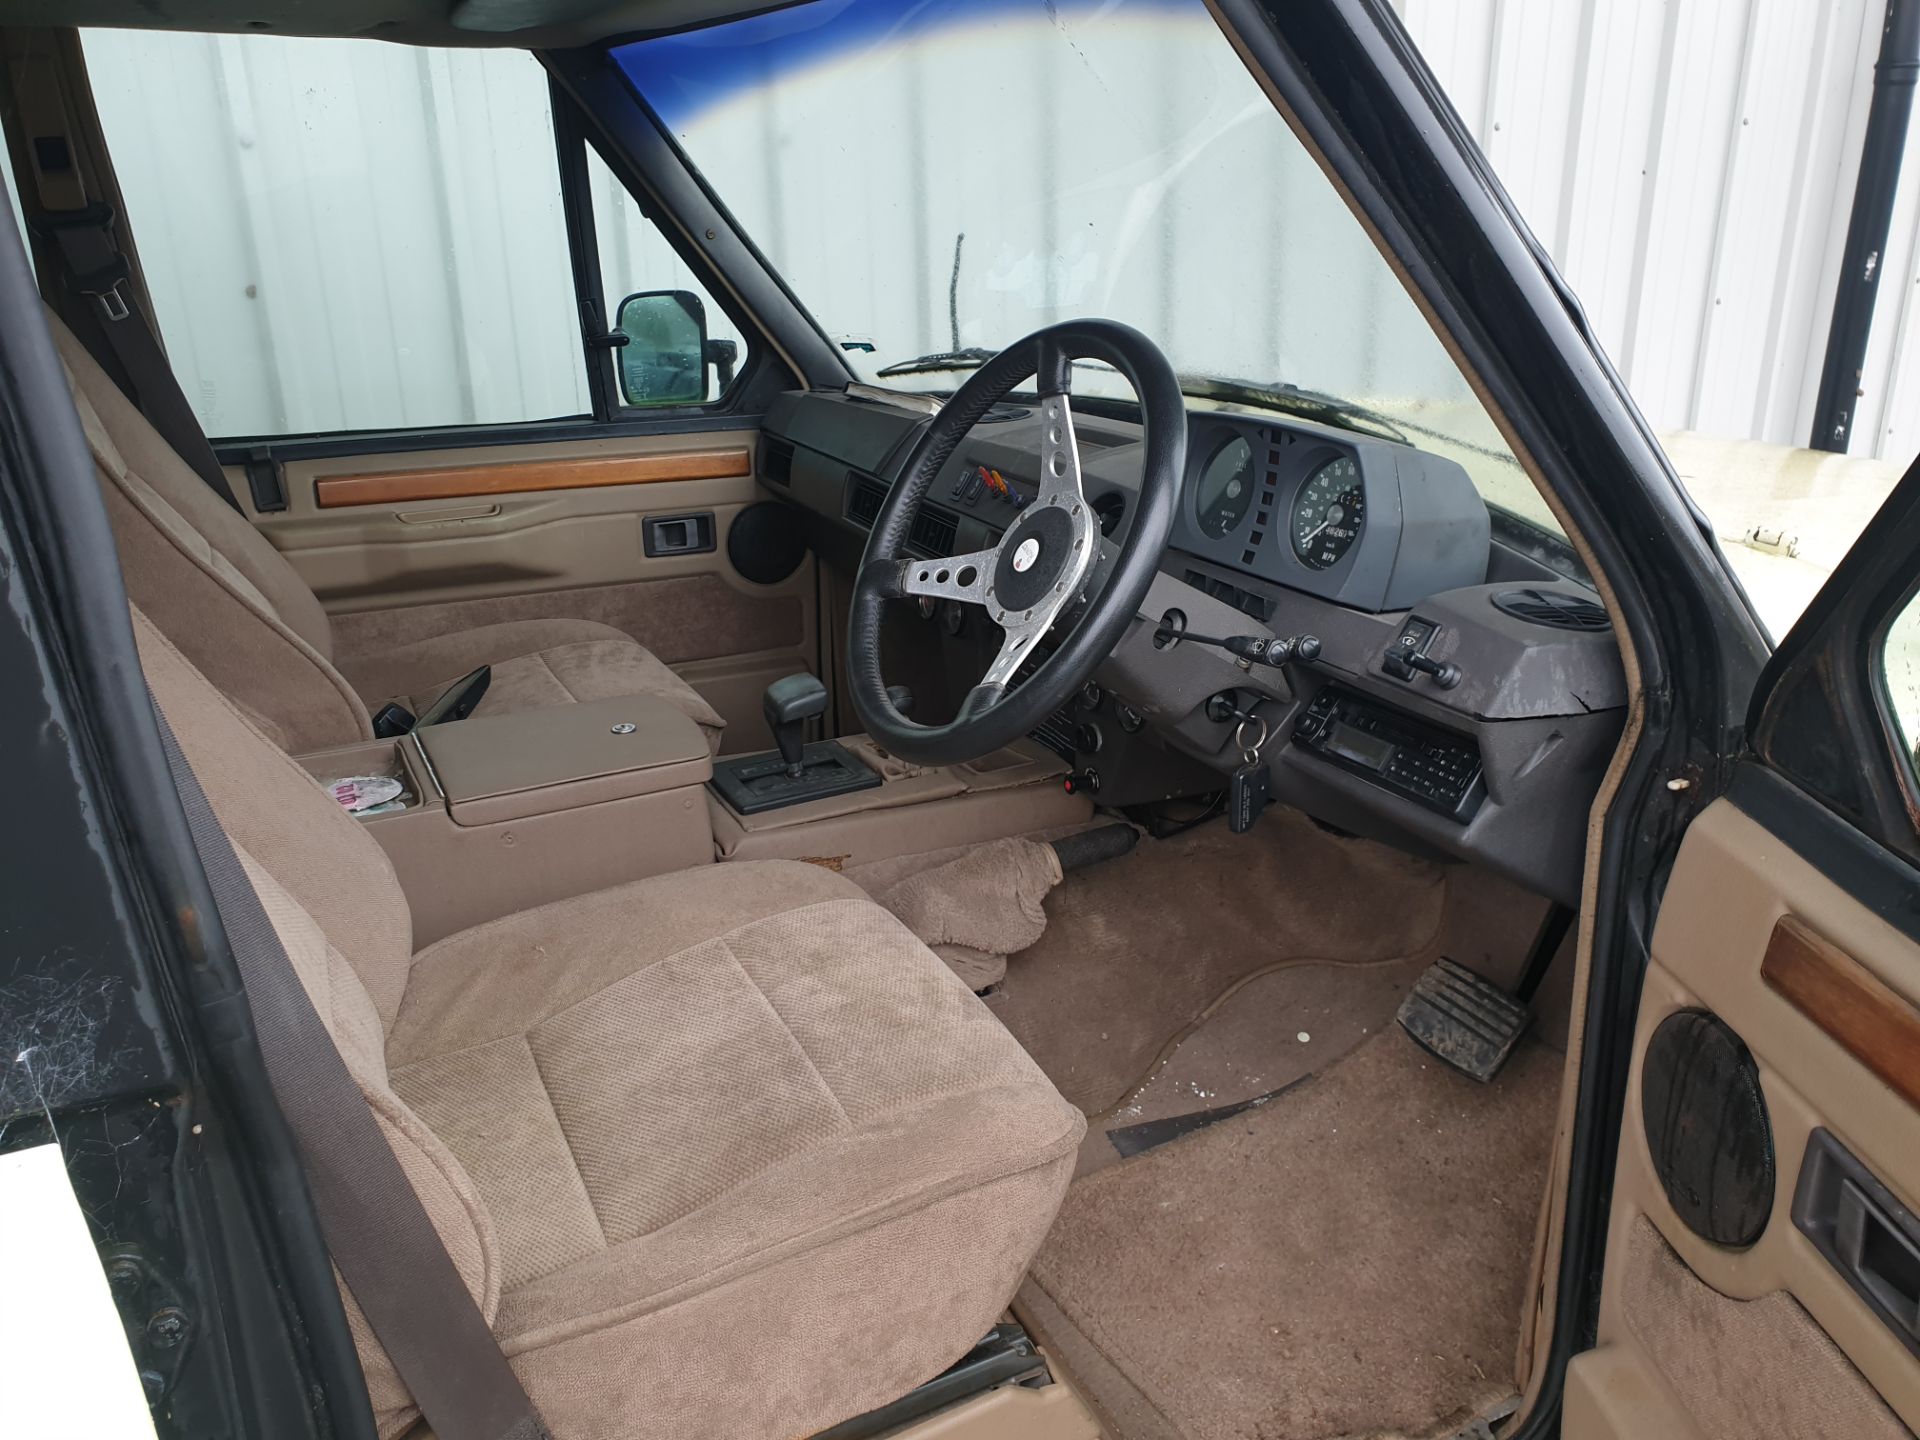 Range Rover Carmicheal 6 Wheel Conversion - Image 12 of 18